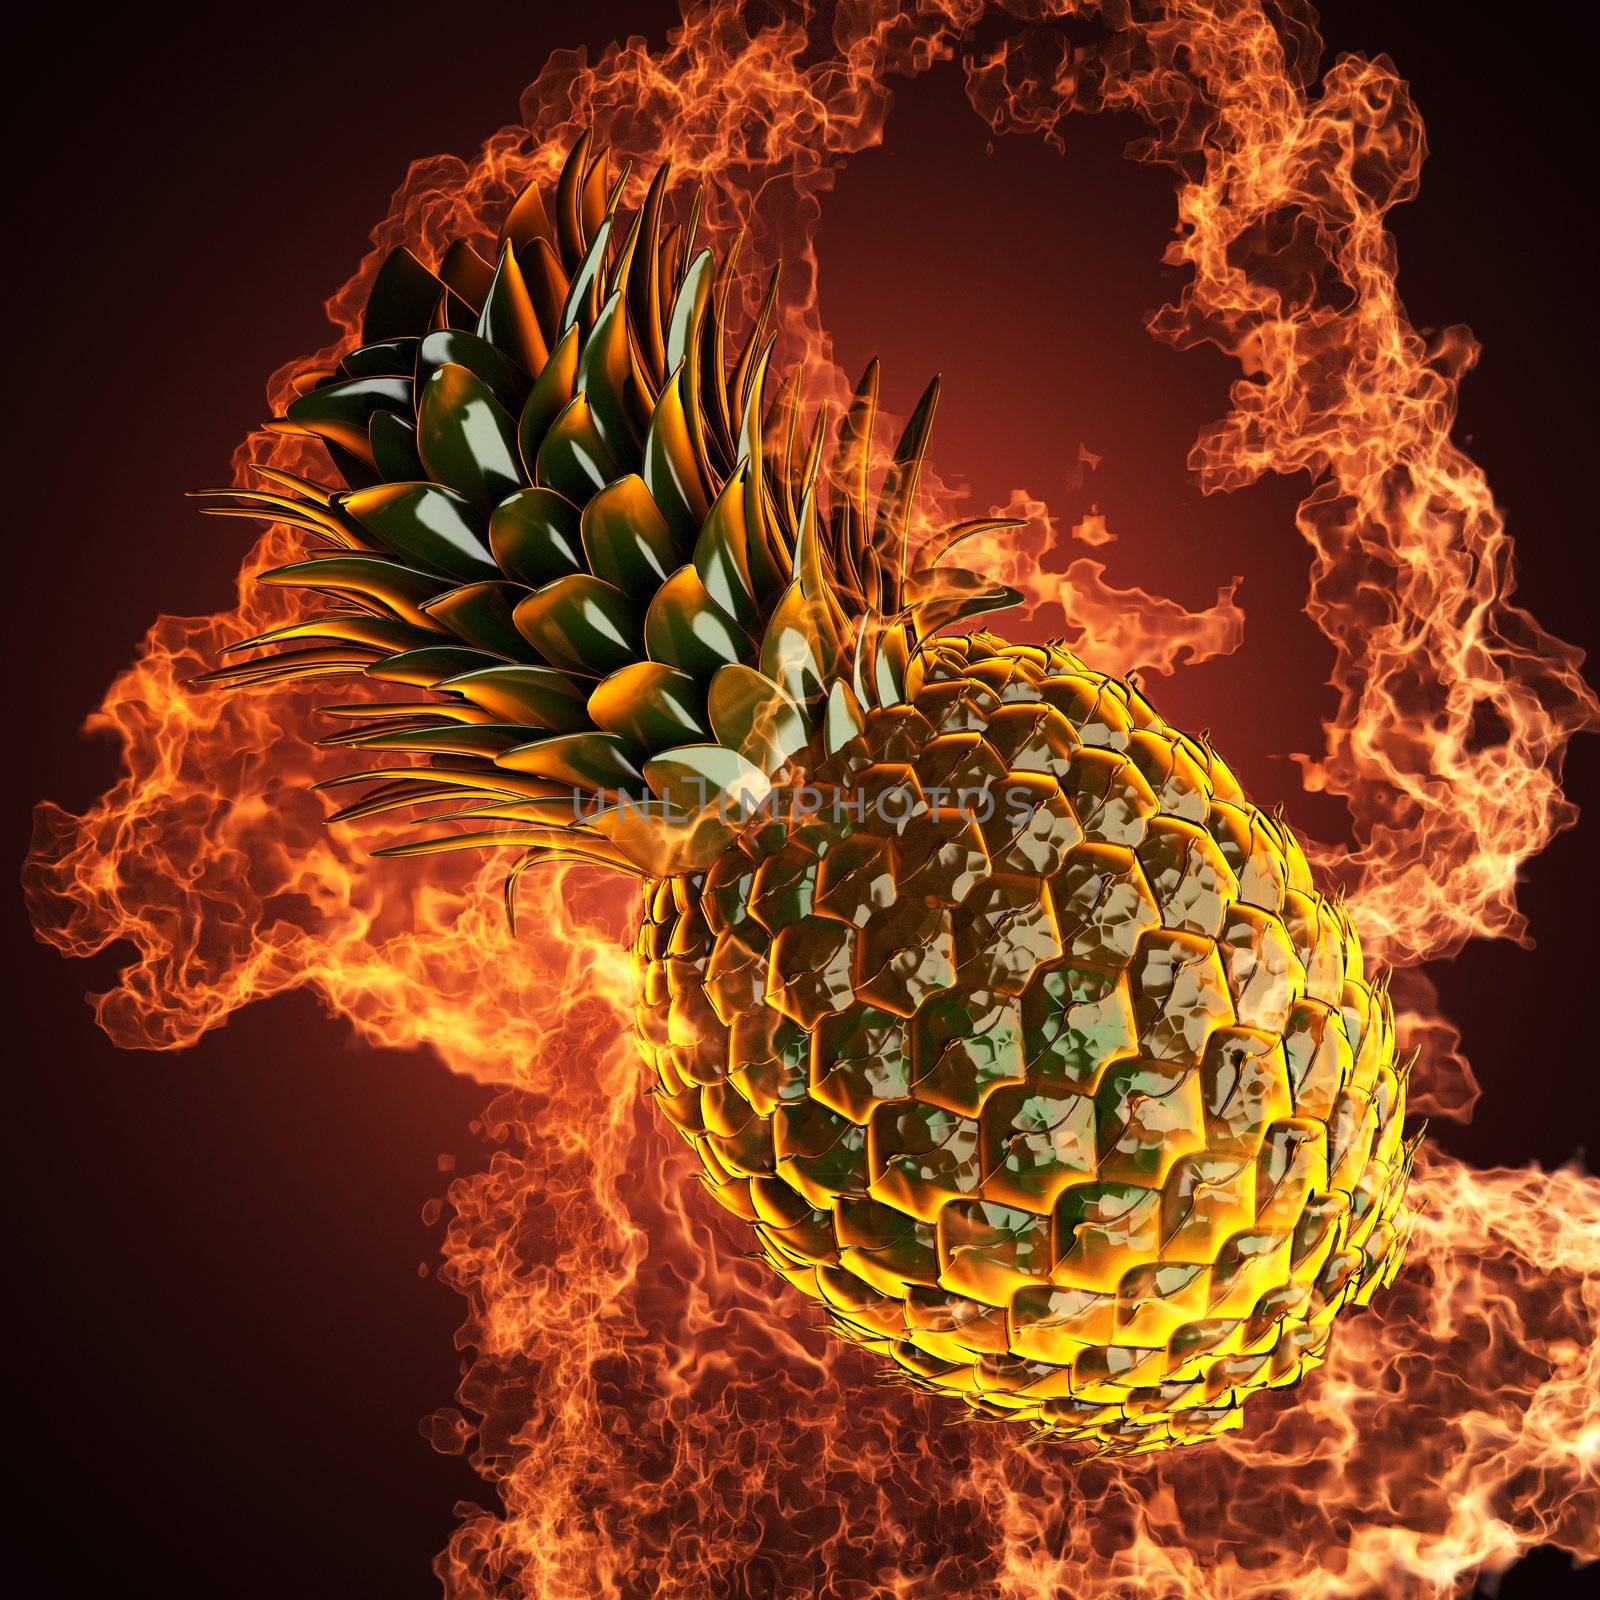 Pineapple in fire by videodoctor